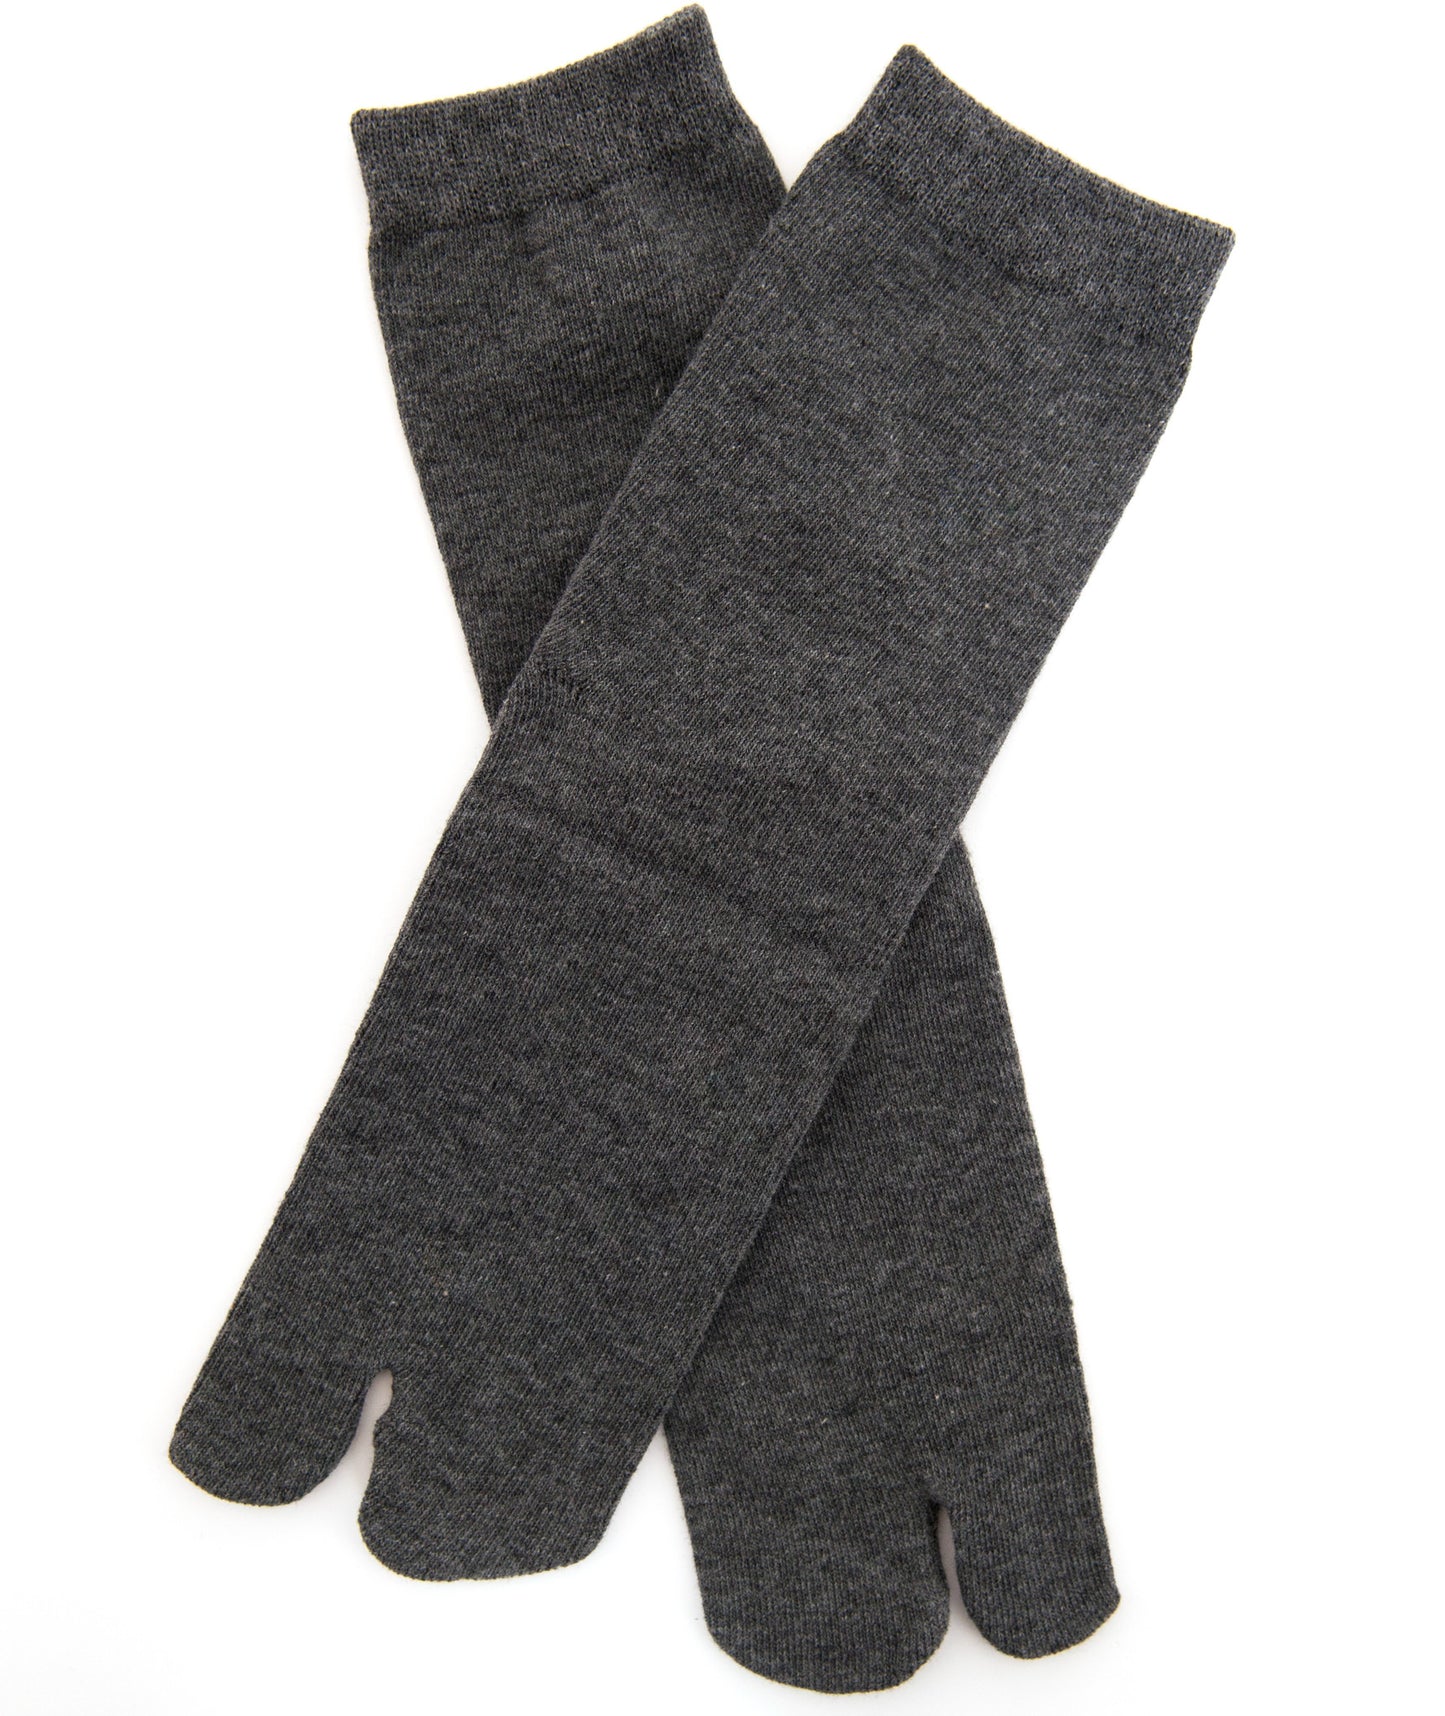 1 Pair - V-Toe Flip Flop Tabi Socks - Grey Solid Casual – V-Toe Socks, Inc